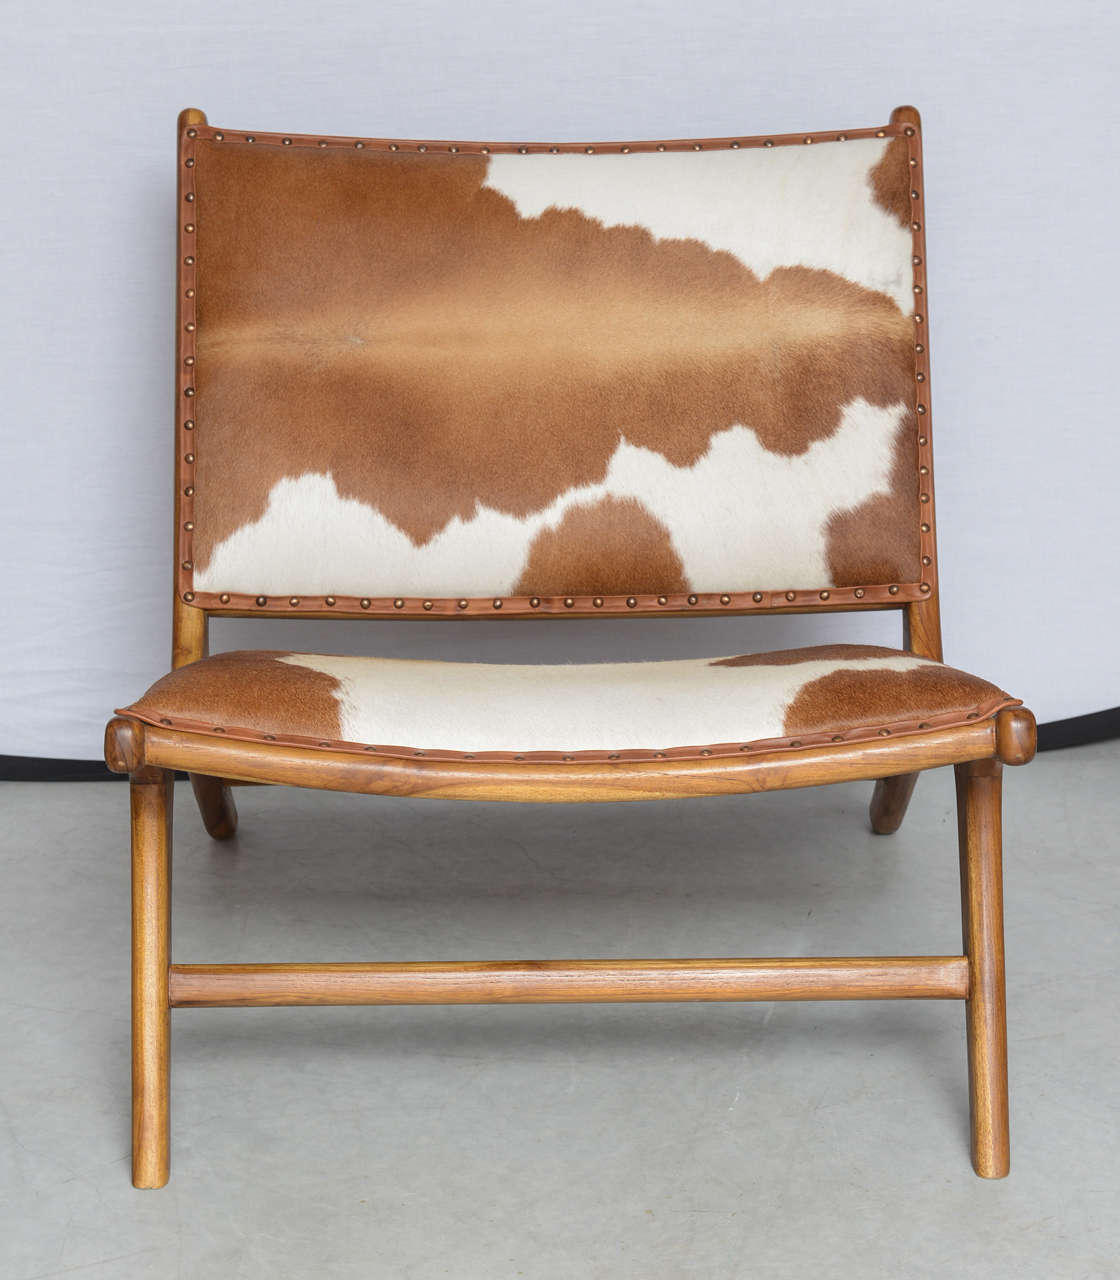 Handmade teak chair.
a comapion chair is available
 